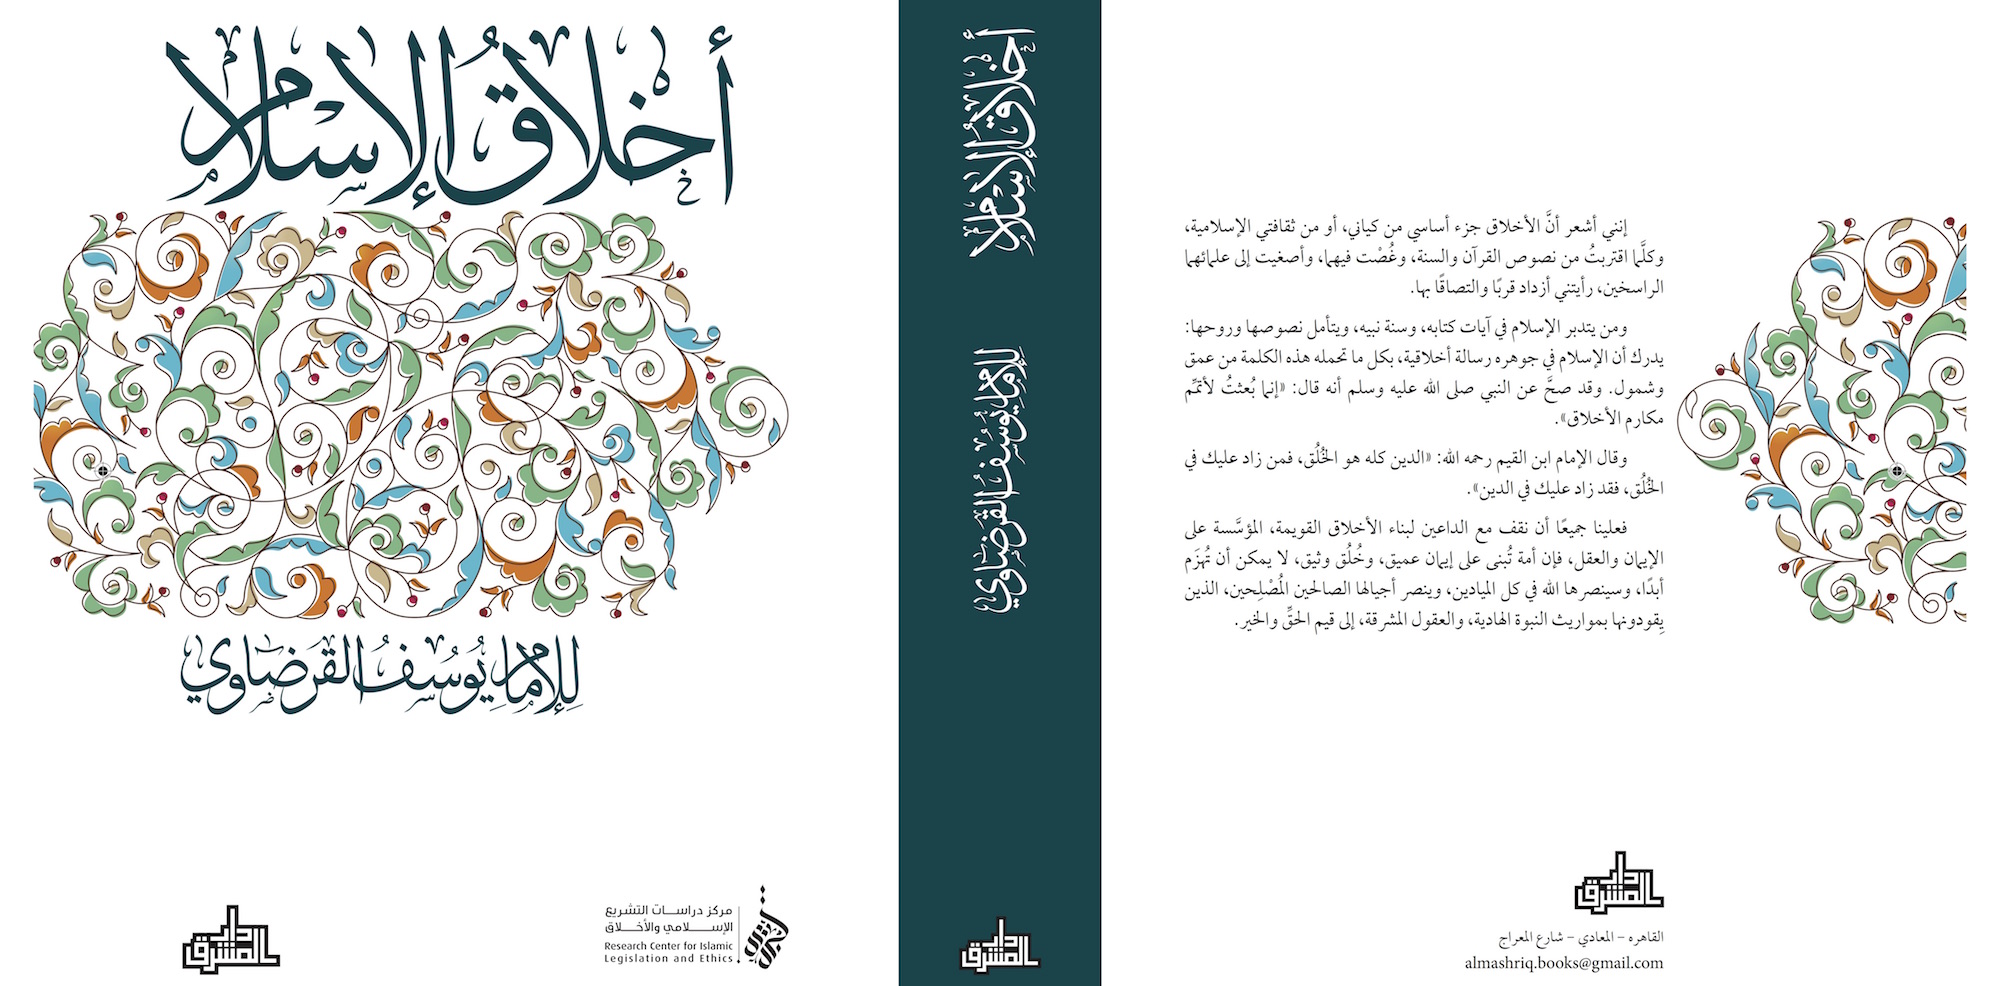 Sheikh Yusuf Al-Qaradawi’s new book “Ethics of Islam” is published